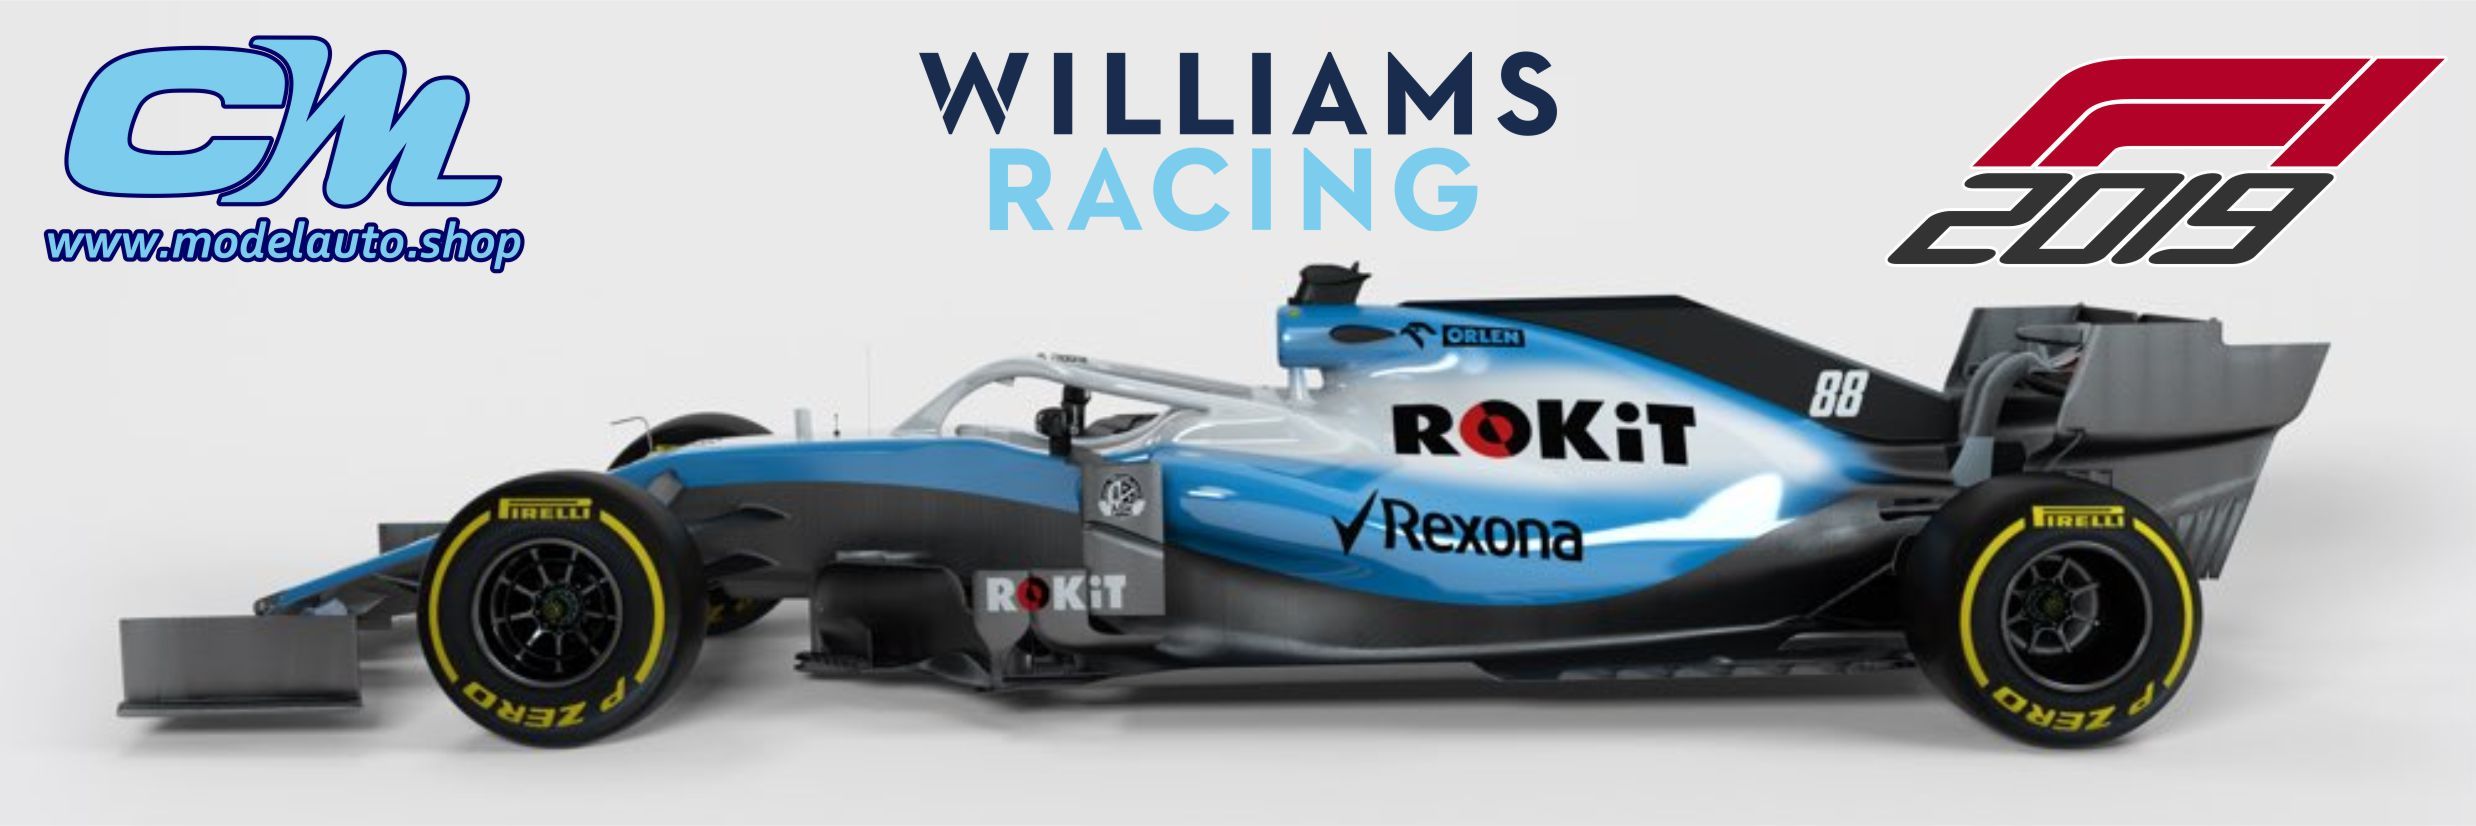 2019_Williams_Racing